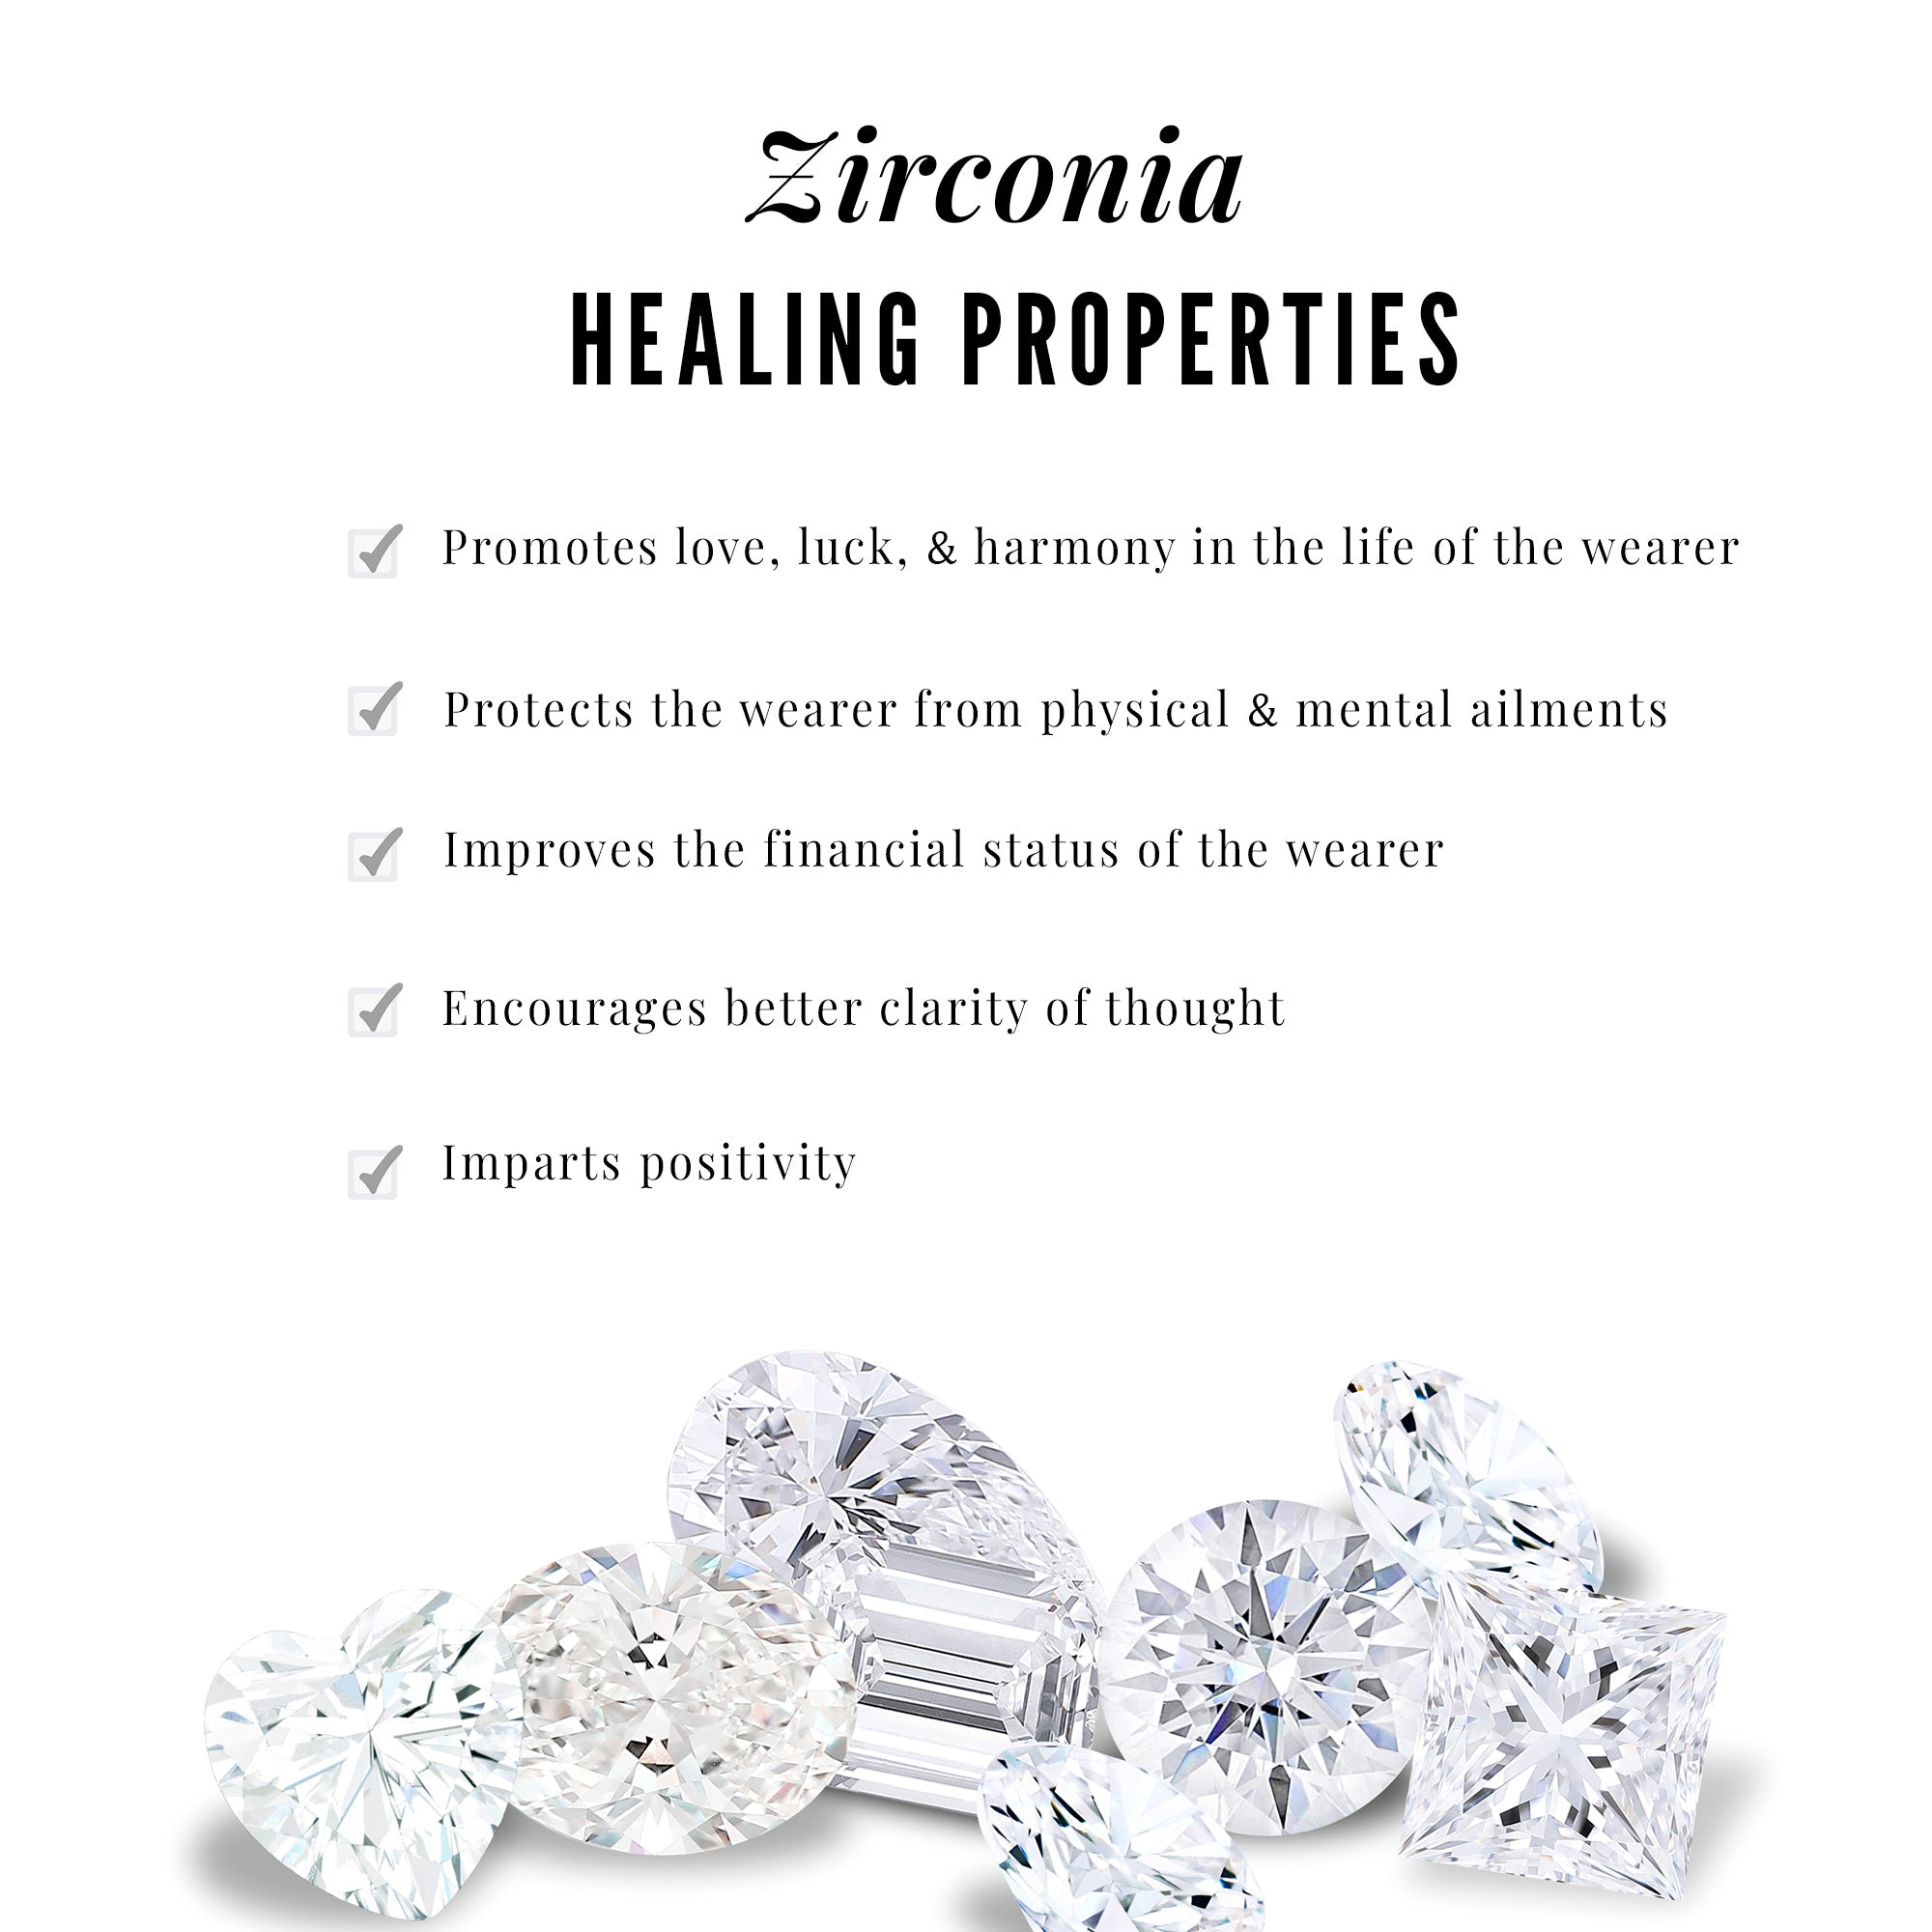 1.75 CT Pear and Round Cut Zircon Dangle Earrings Zircon - ( AAAA ) - Quality - Rosec Jewels